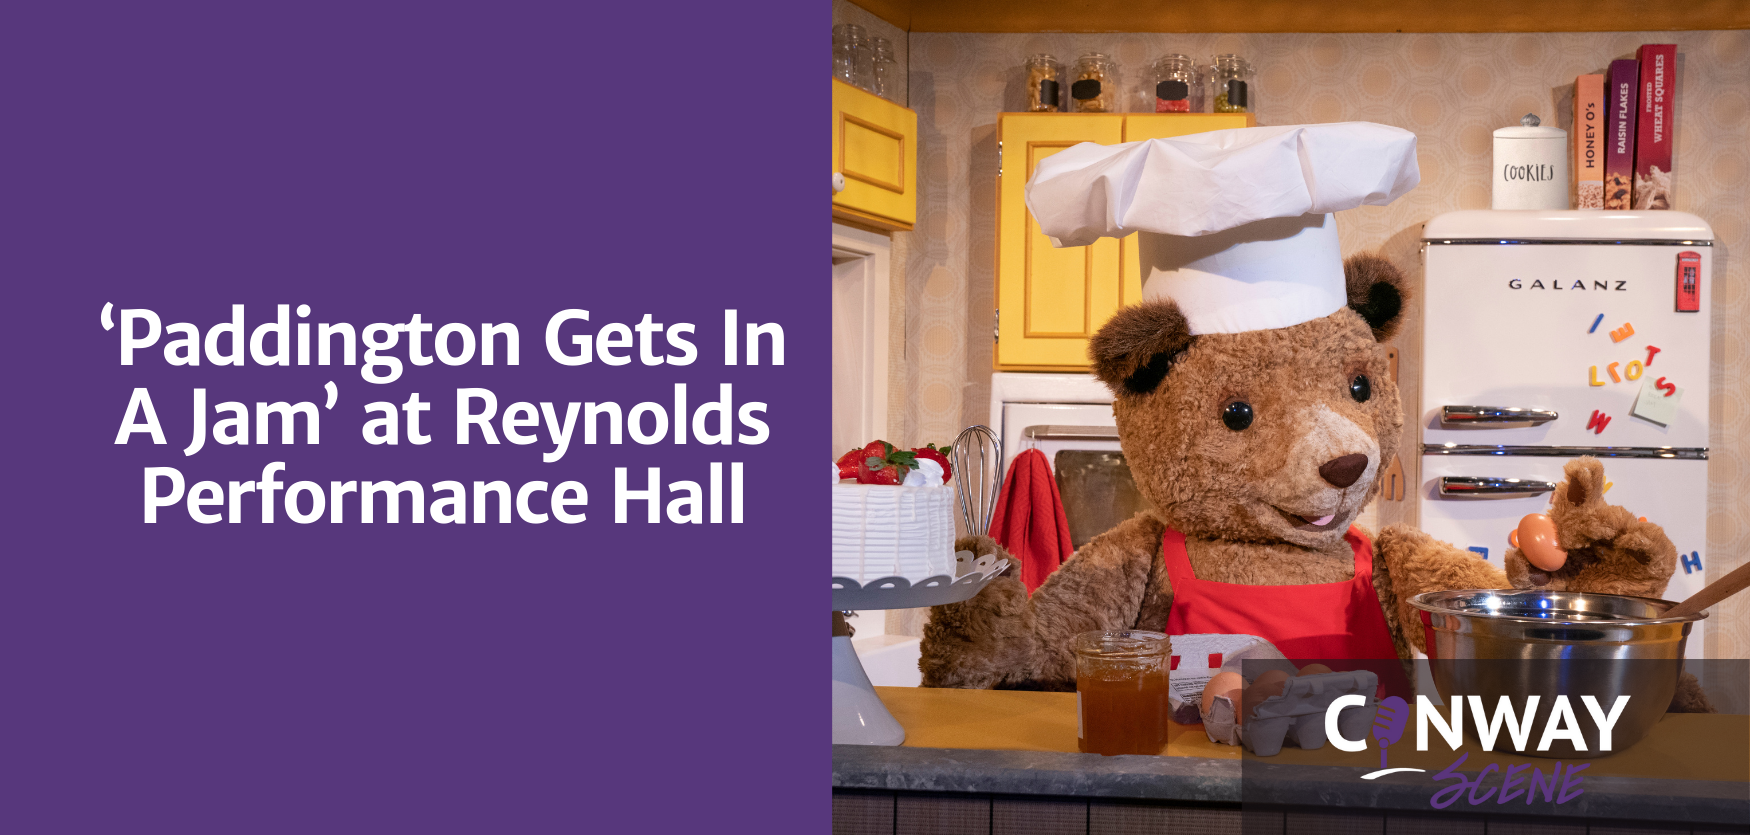 ‘Paddington Gets In A Jam’ at Reynolds Performance Hall